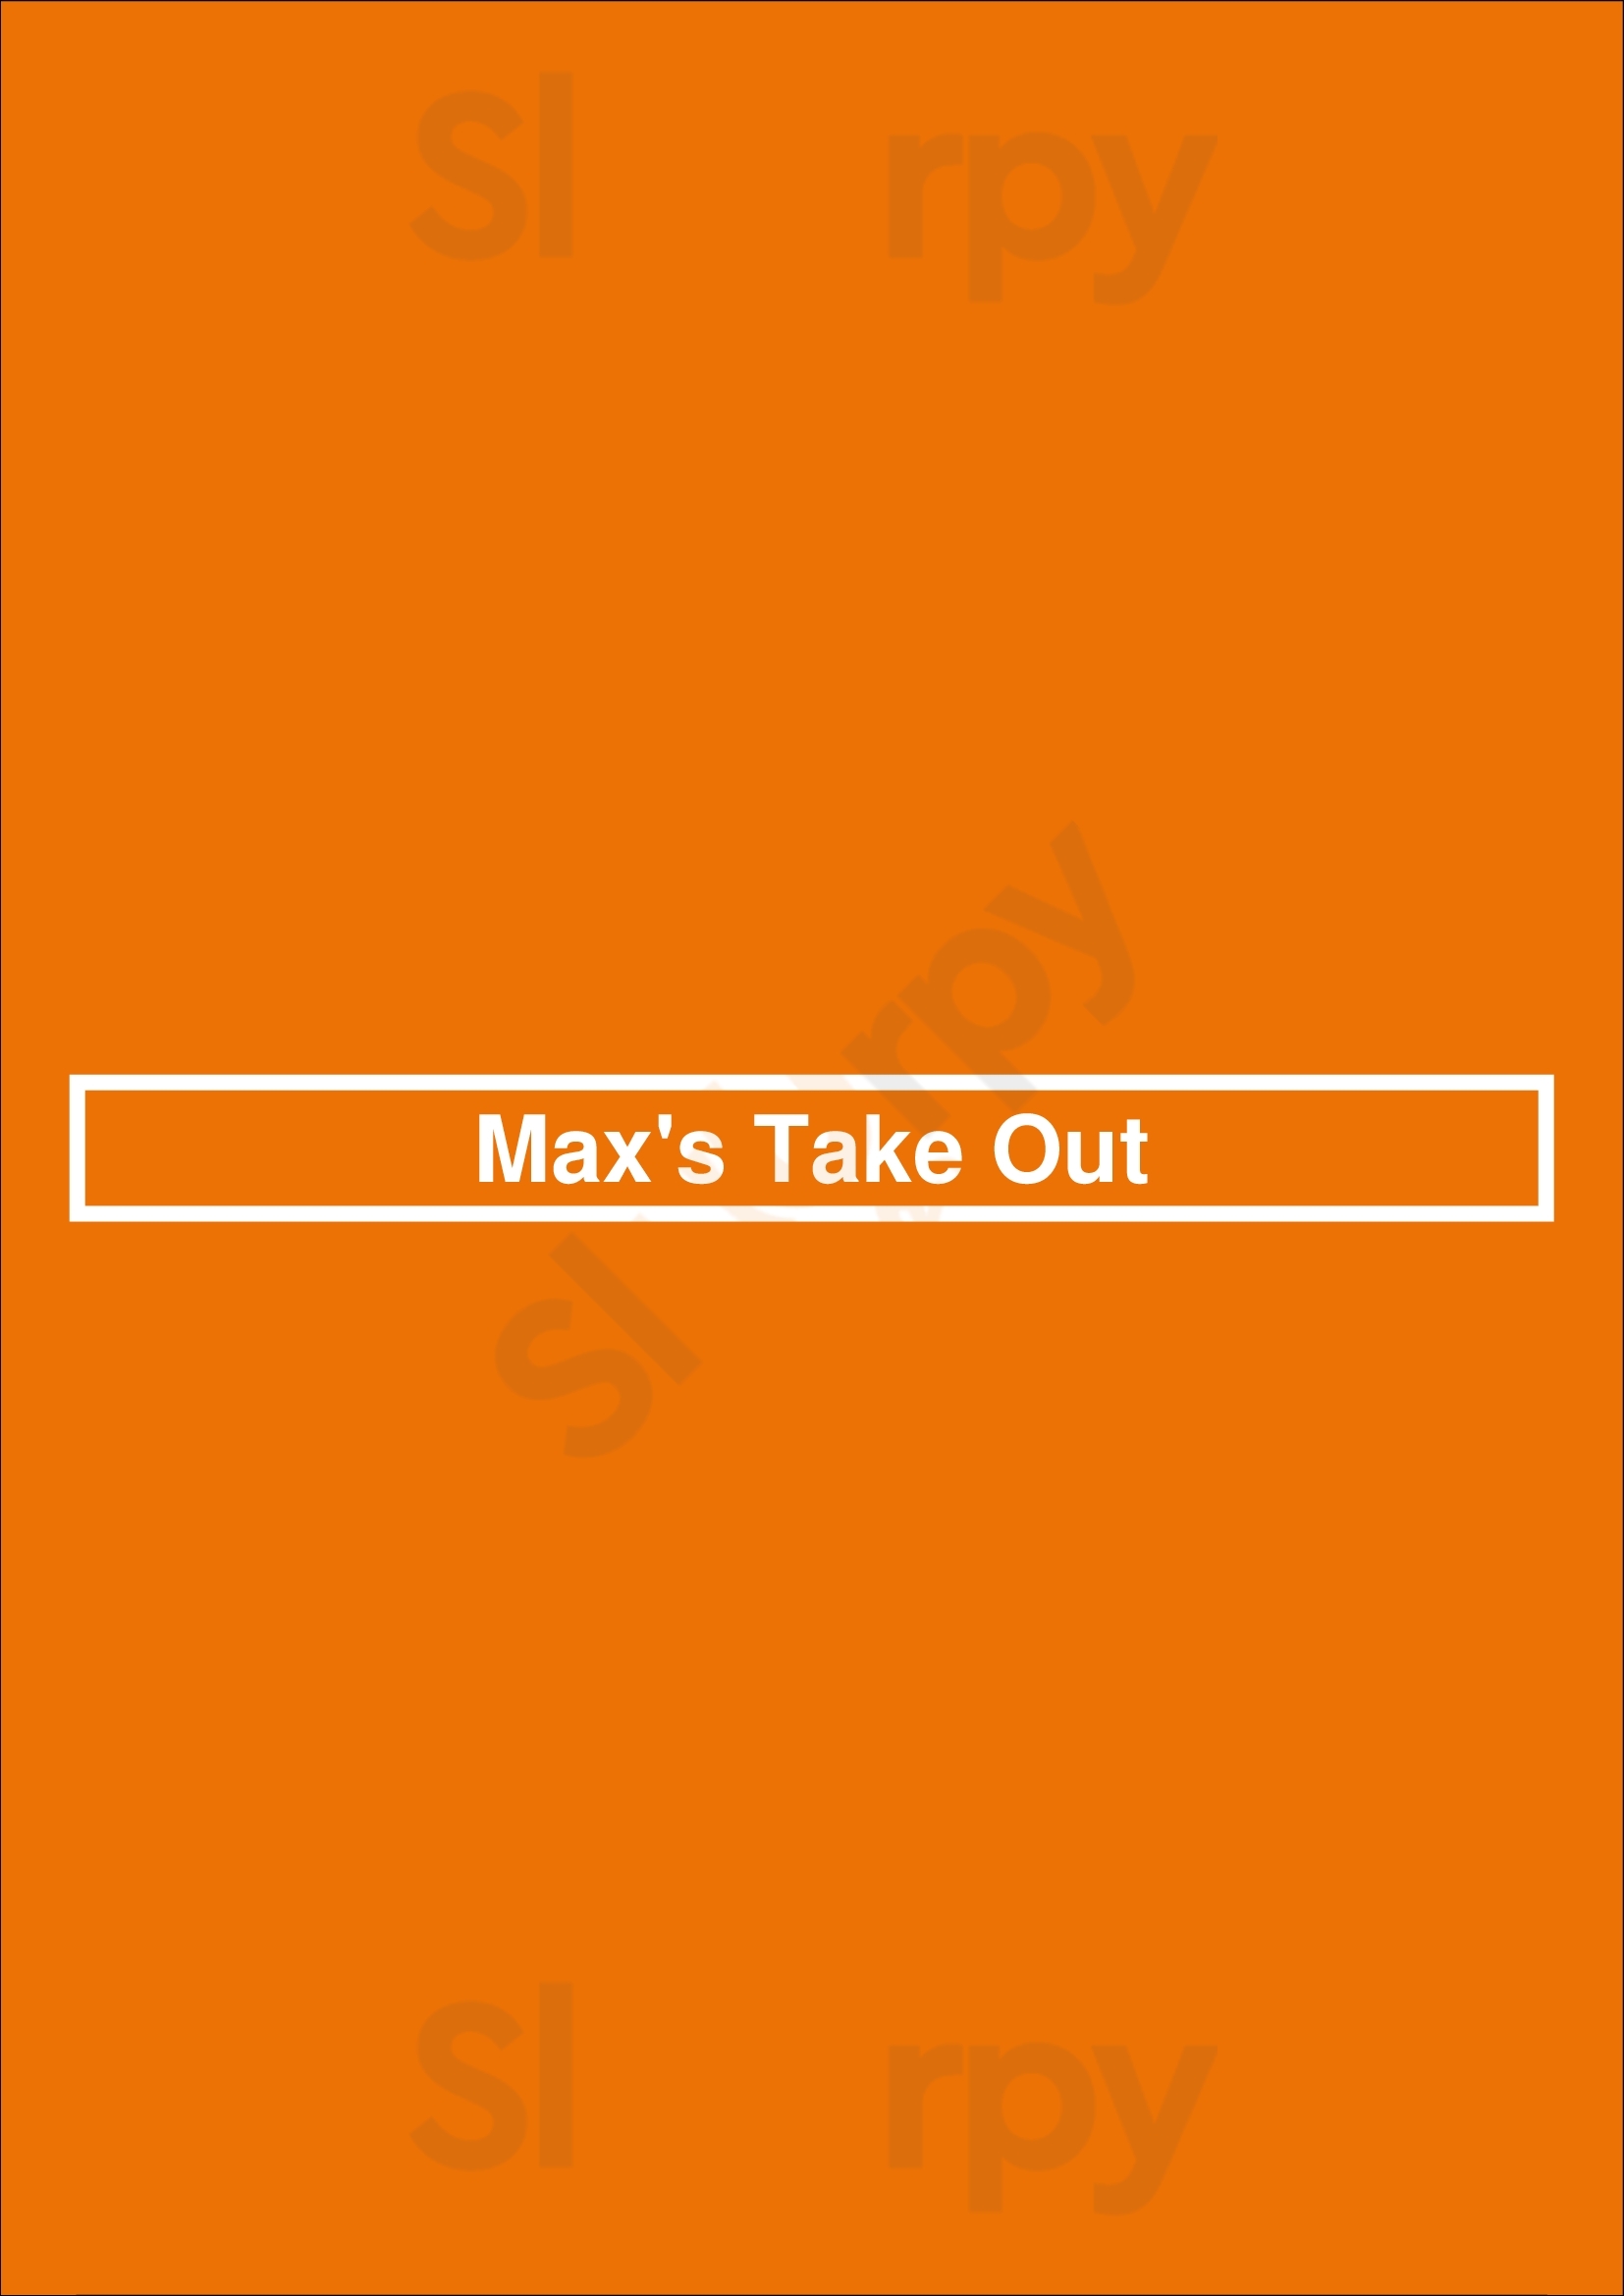 Max's Take Out Chicago Menu - 1